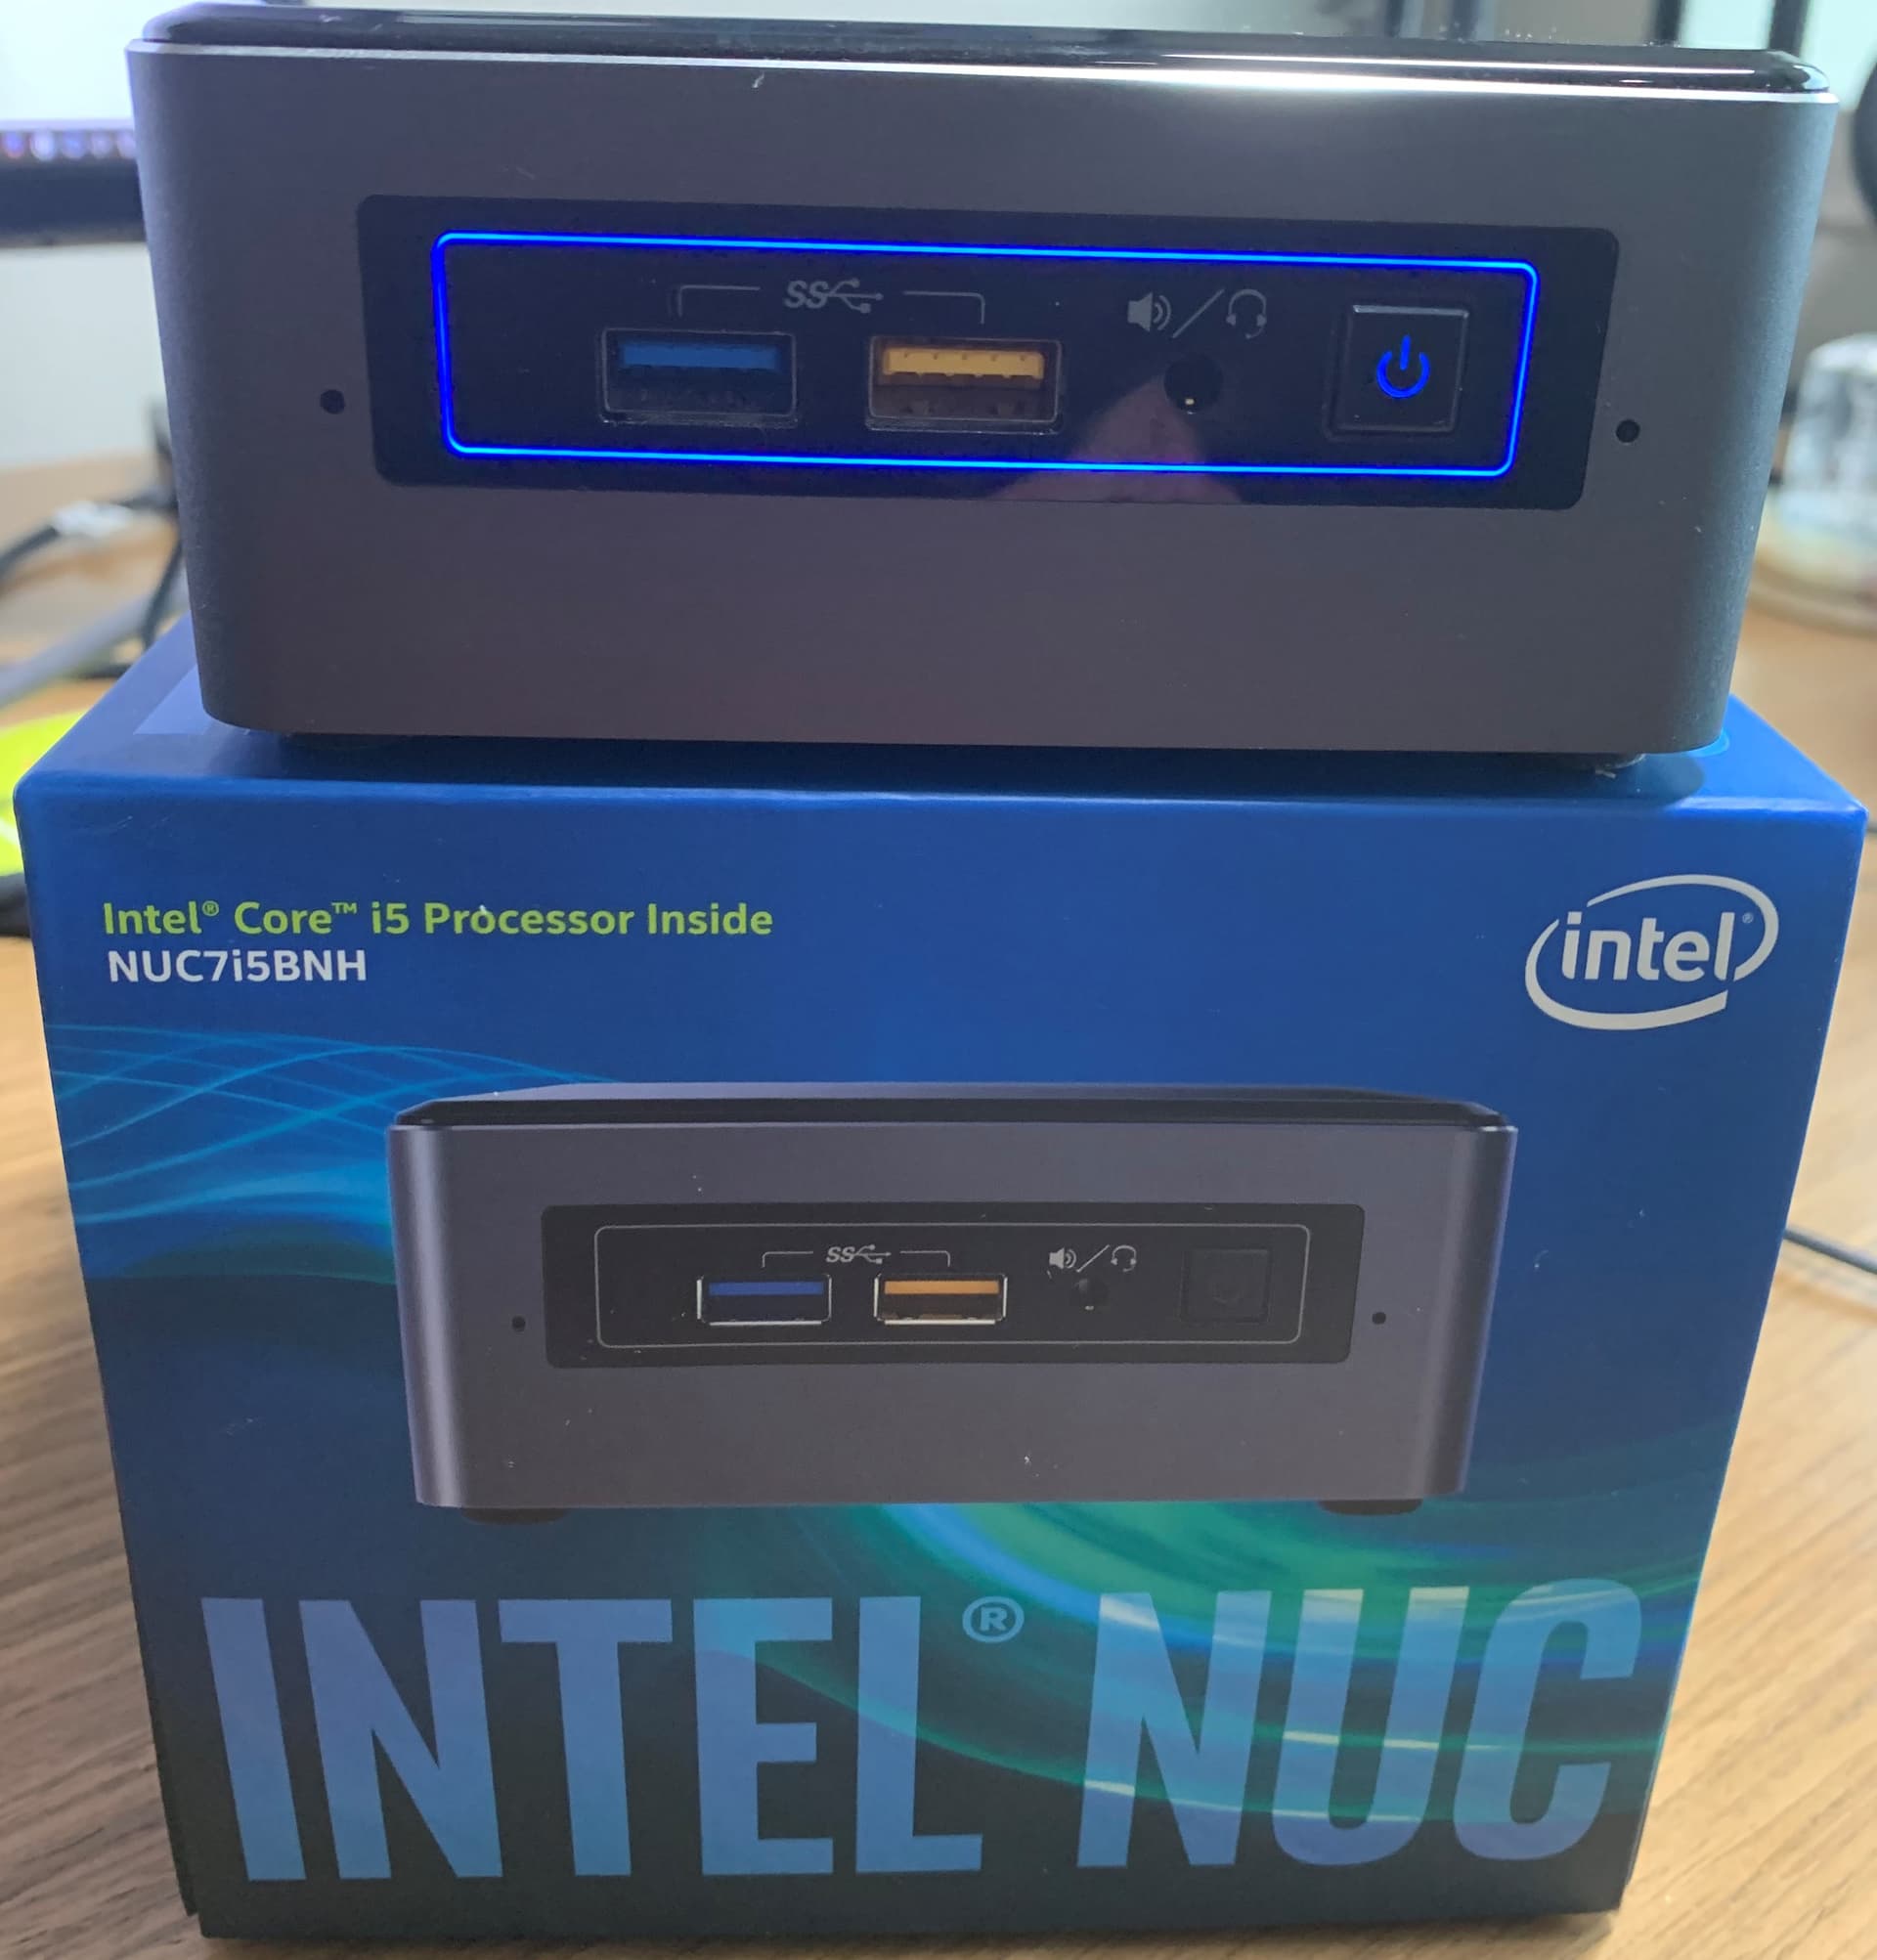 FS: Intel NUC 7i5BNH 8 gb RAM 128 gb M.2 SSD with Current ROCK